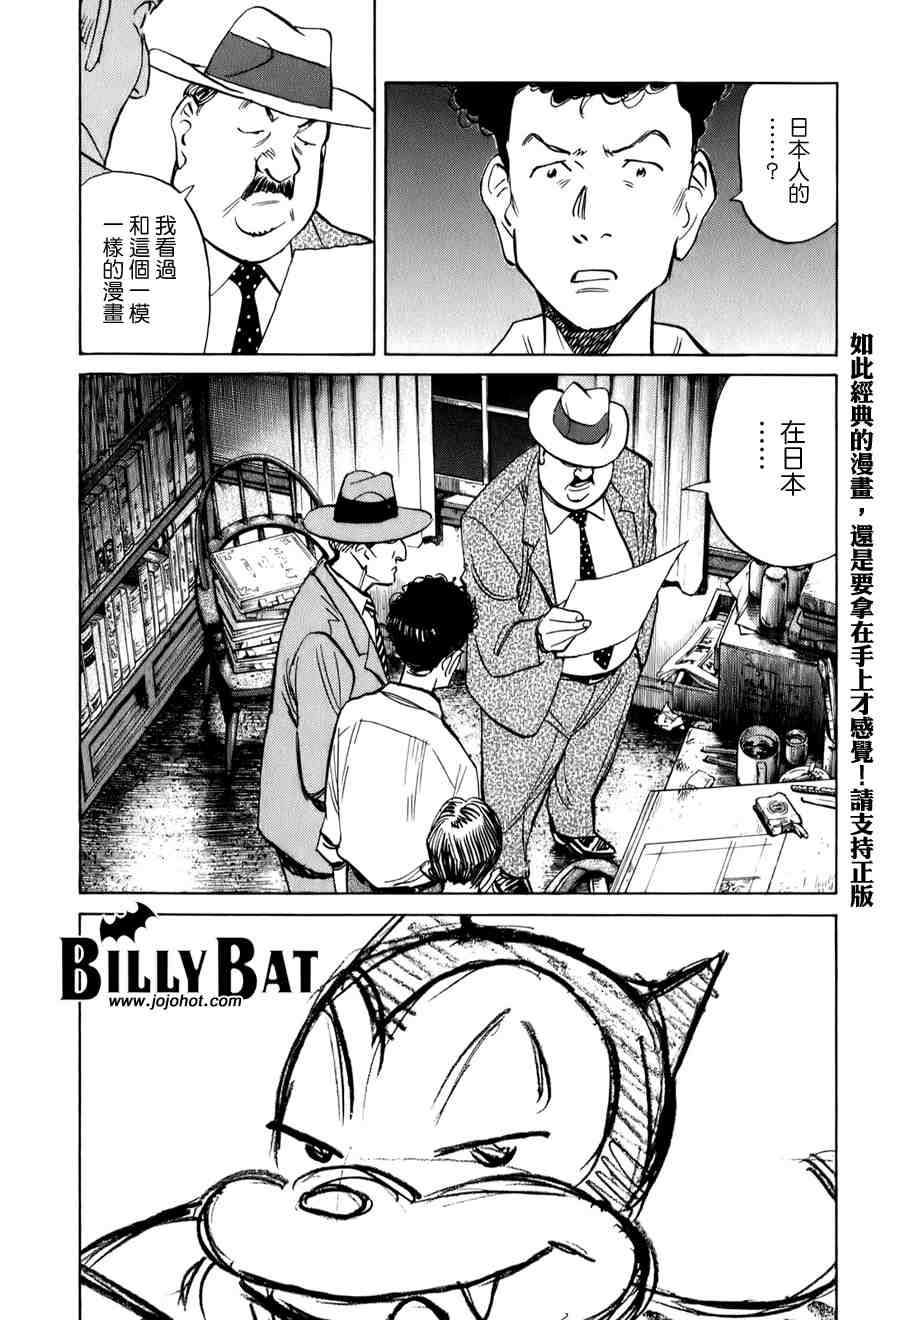 Billy_Bat - 第1卷(1/4) - 6